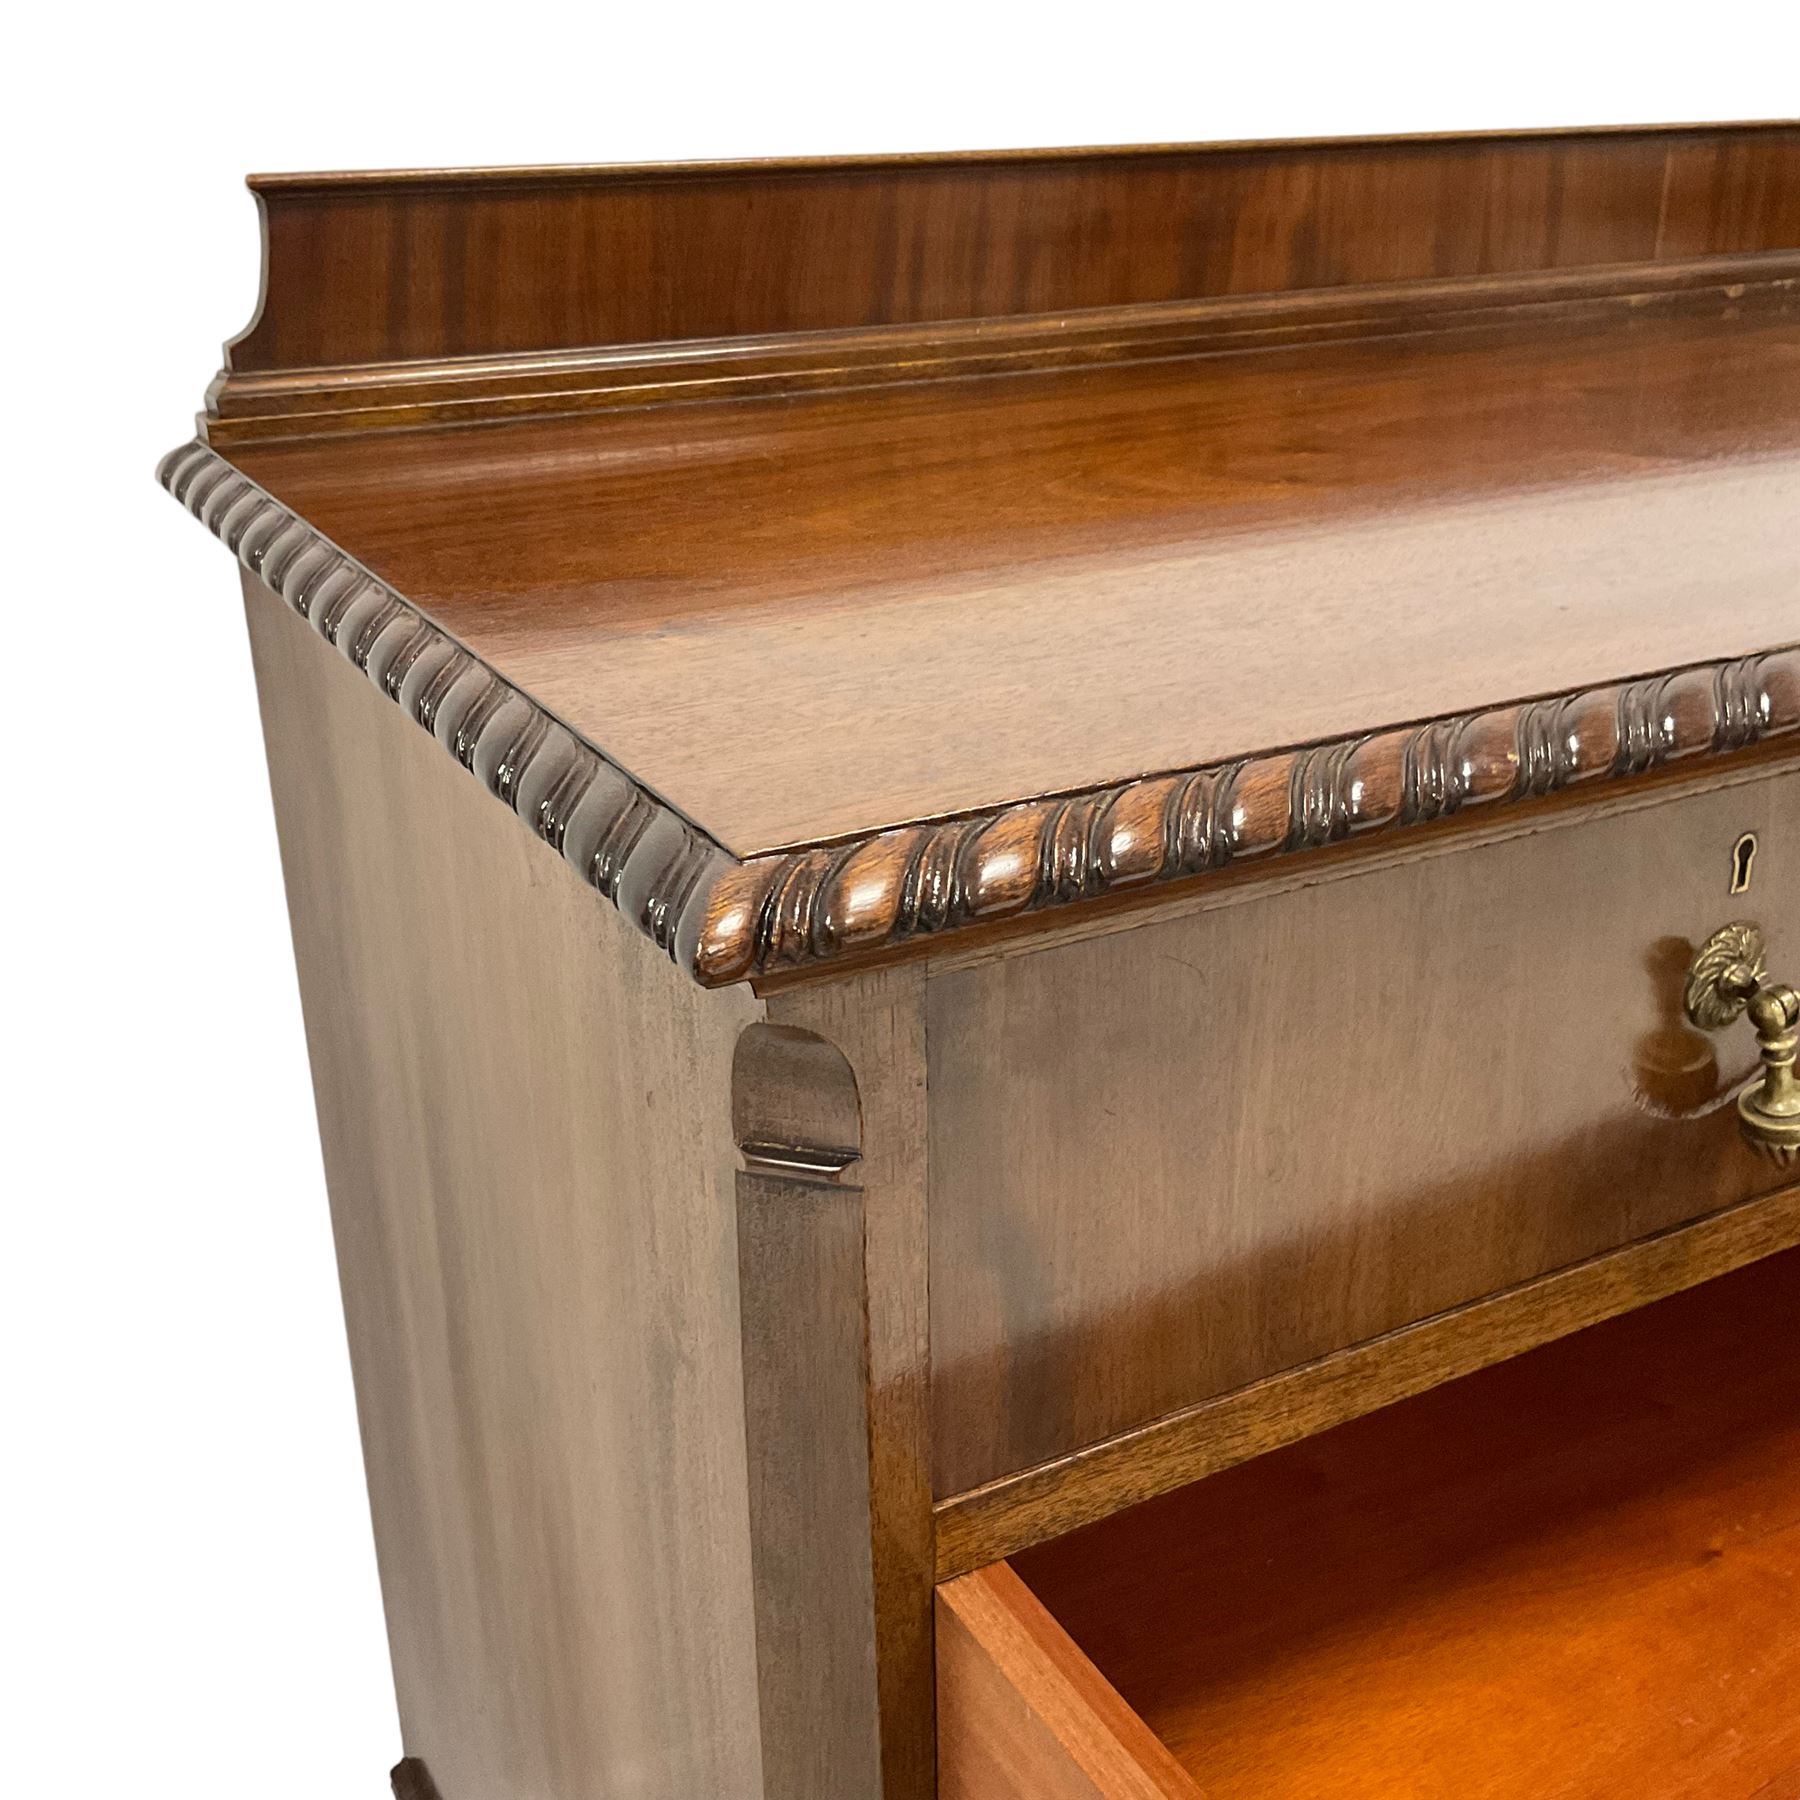 Mid-20th century mahogany linen chest - Image 2 of 7